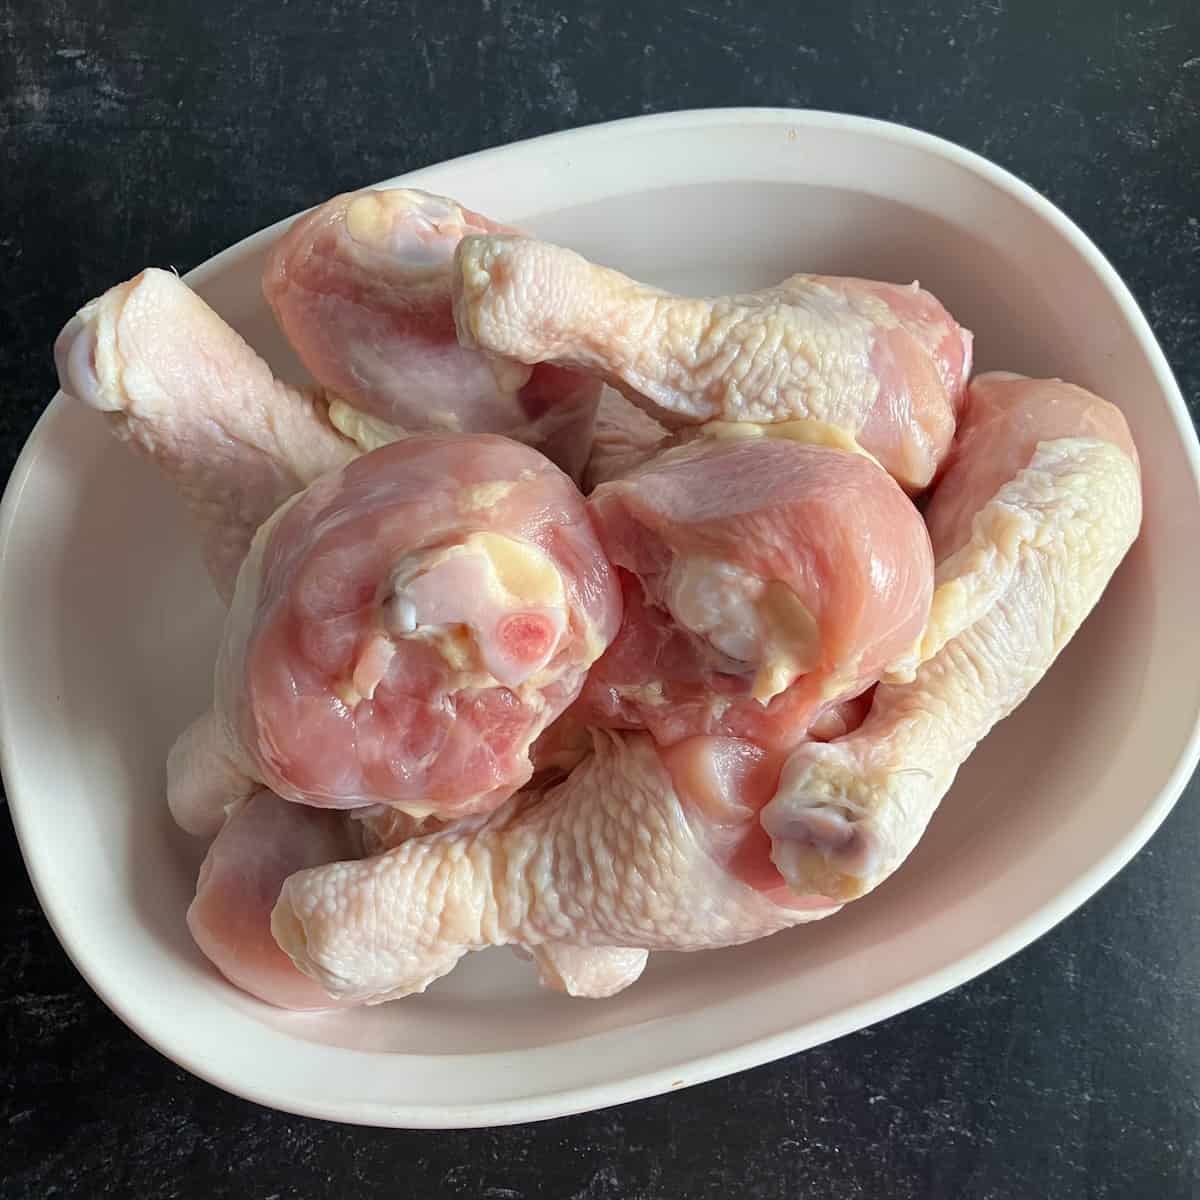 how to defrost bone in chicken fast